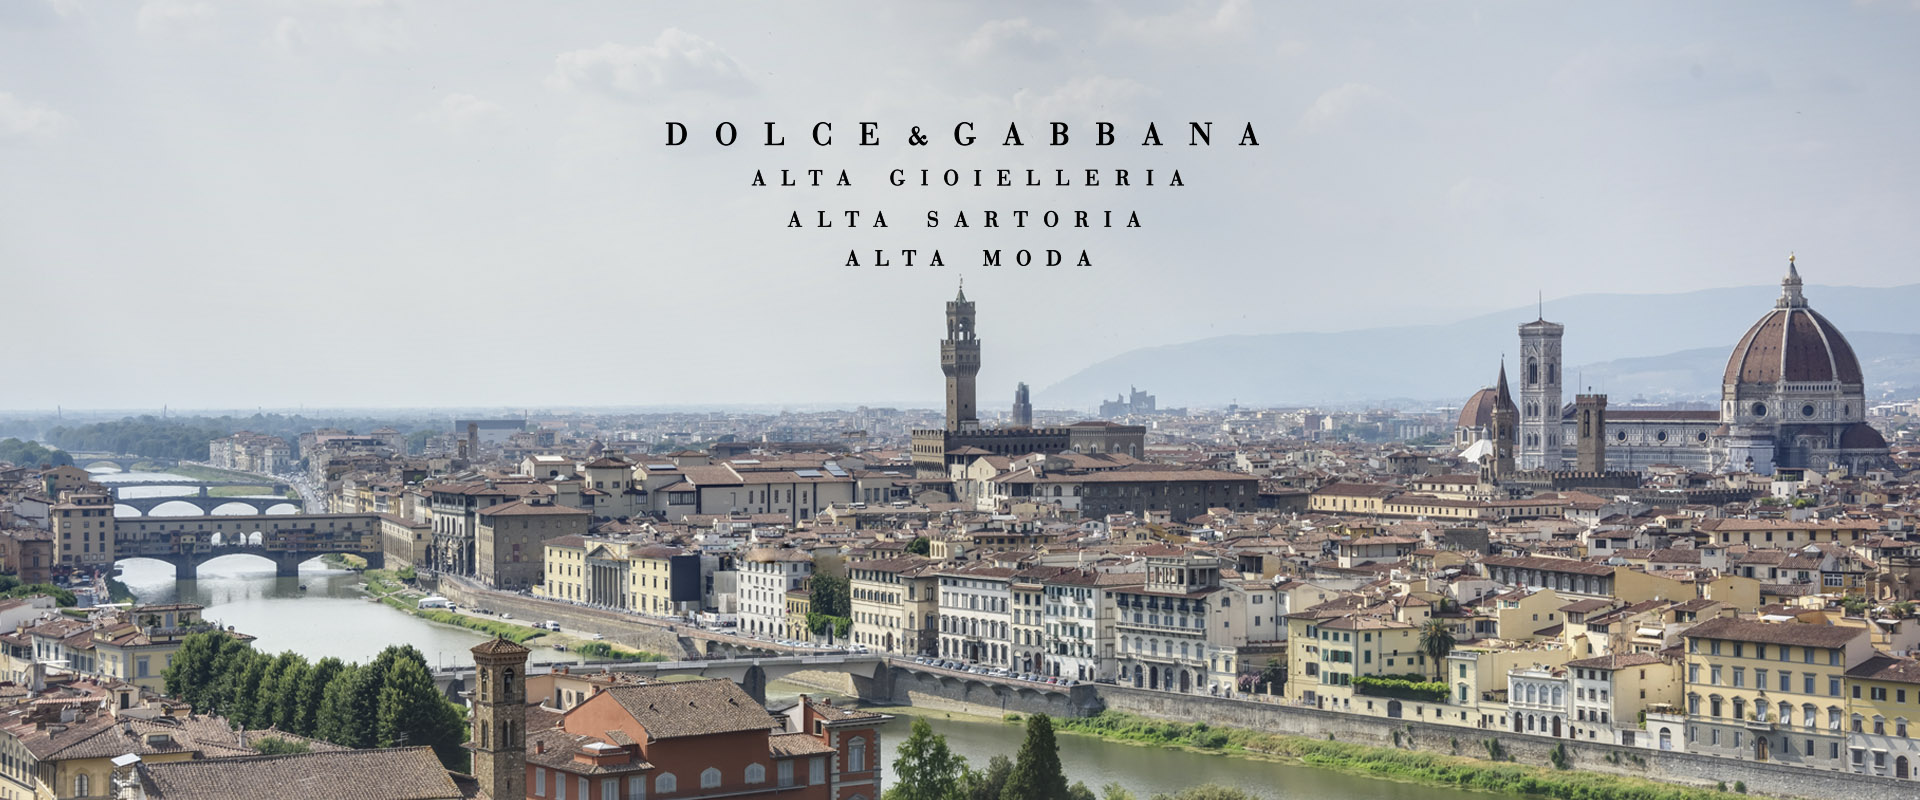 dolce-and-gabbana-palazzo-dolcegabbana-firenze-online-press-room-top_banner